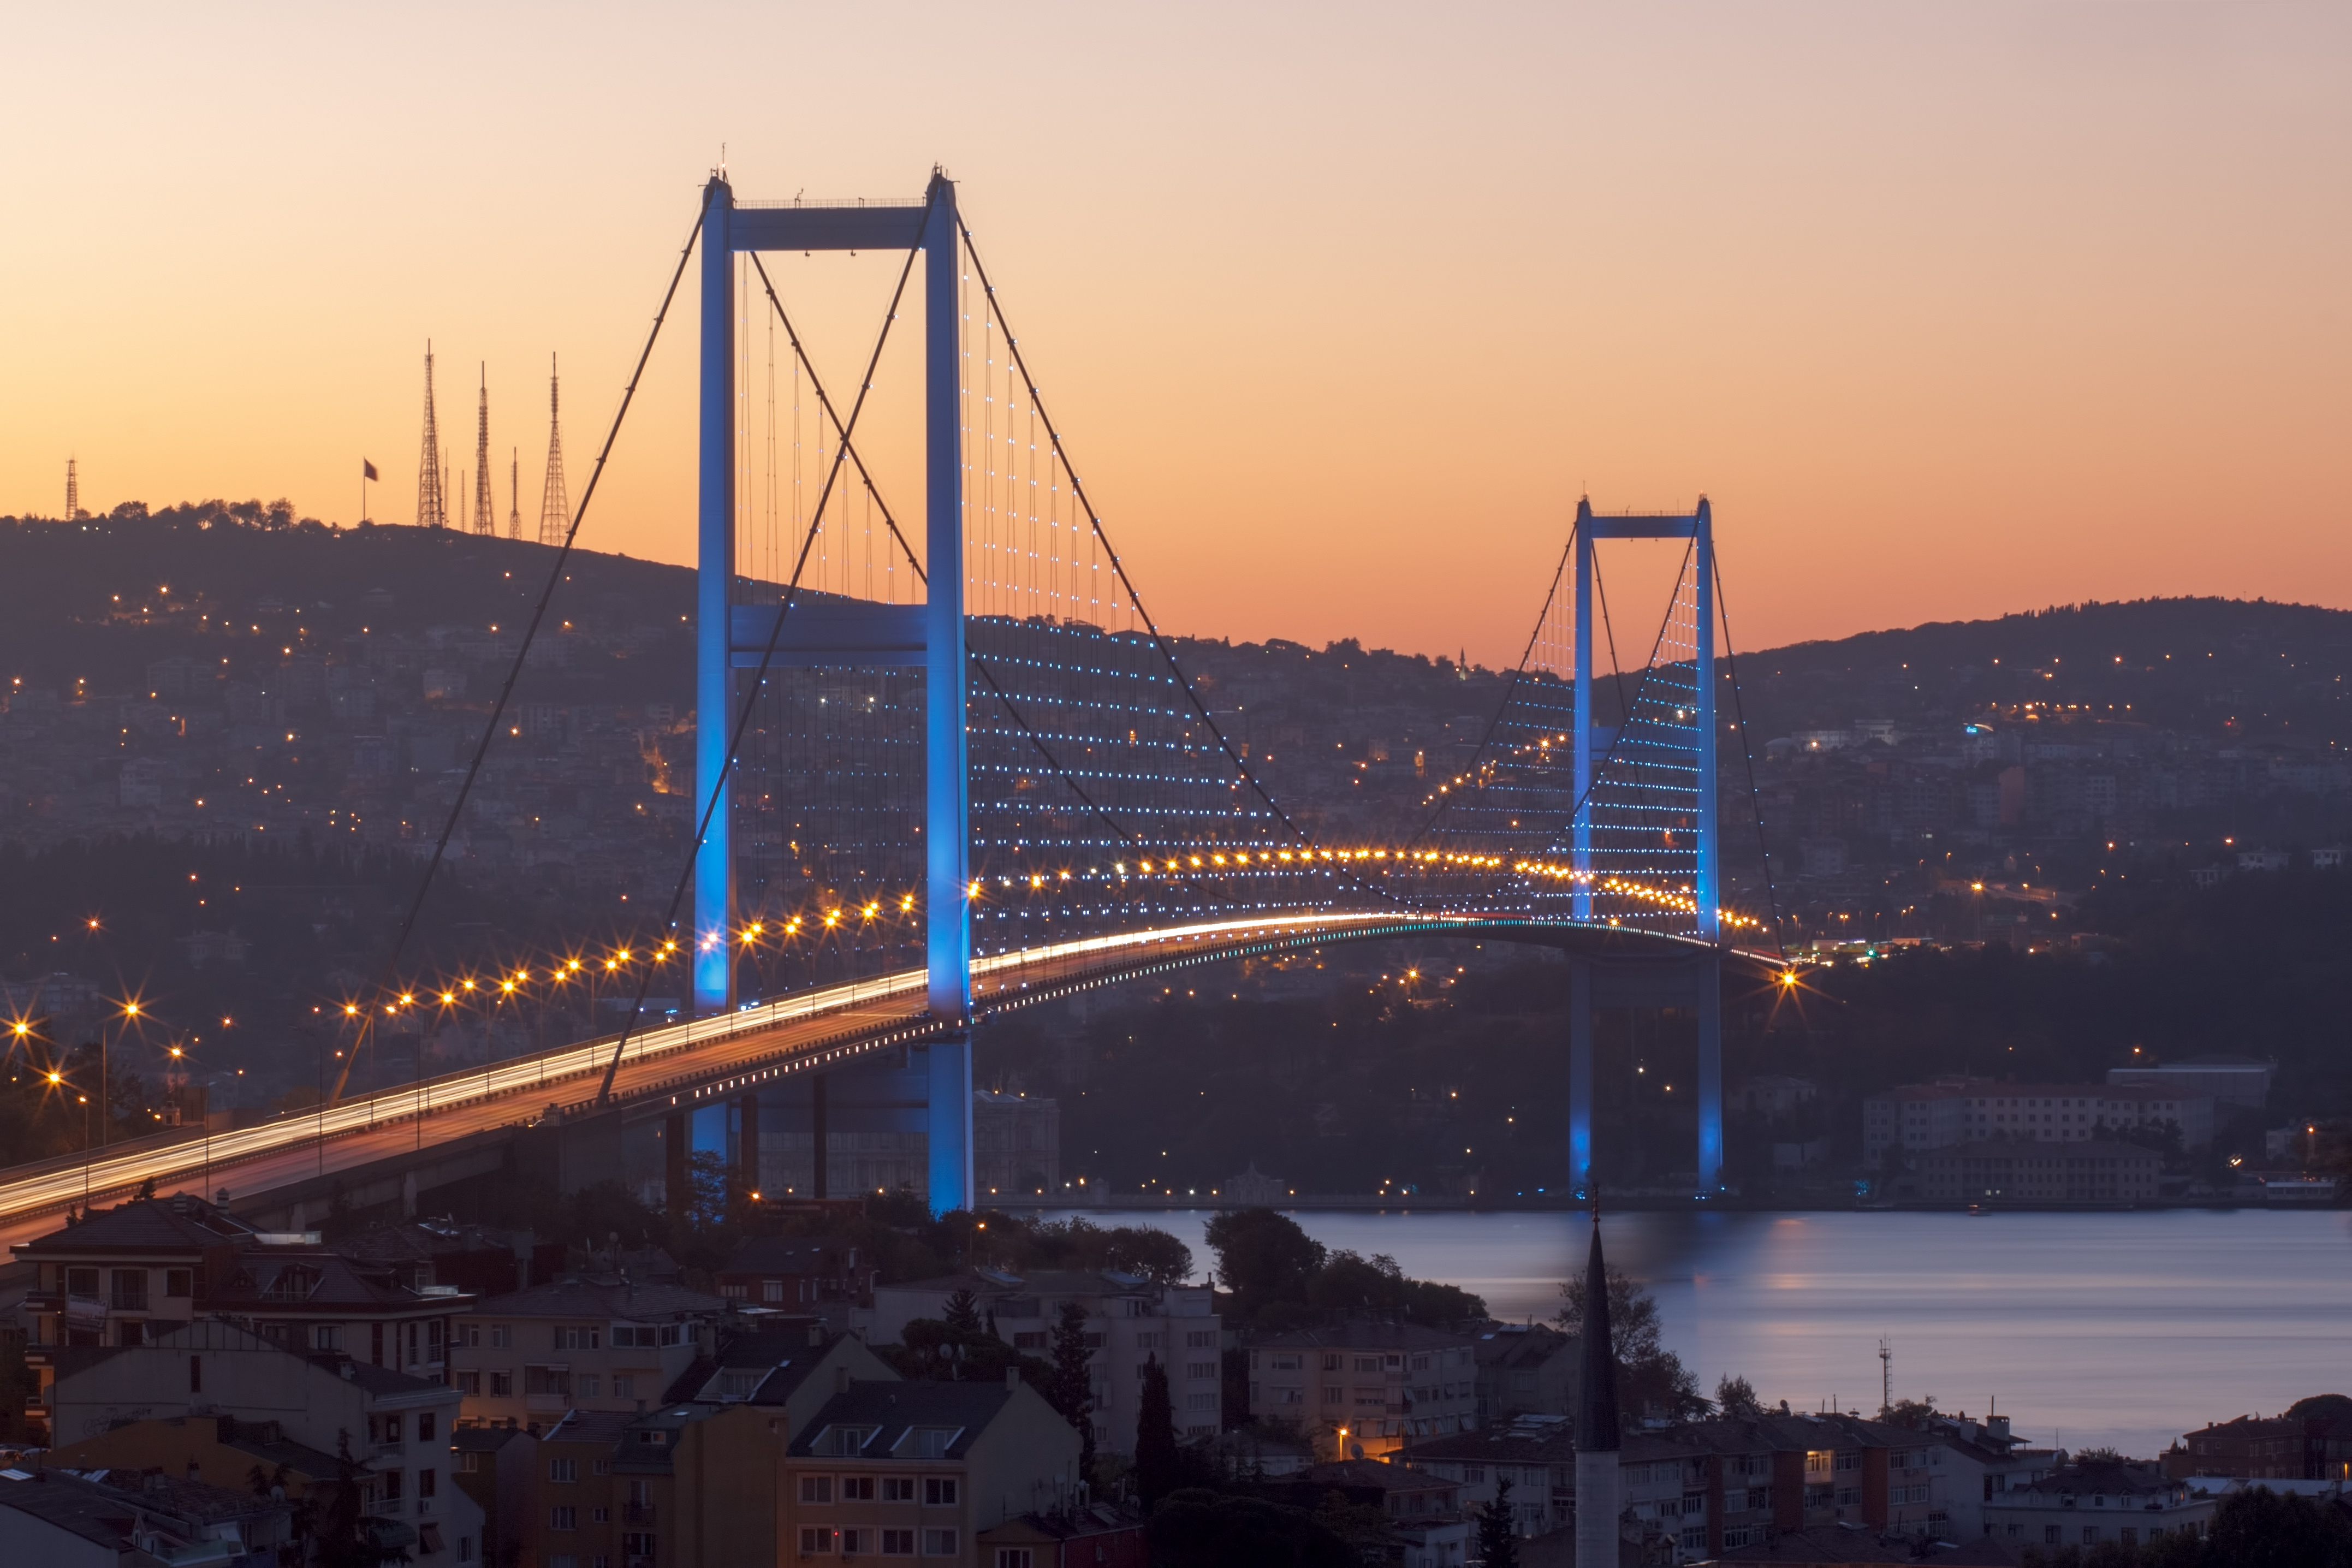 Bosphorus Bridge 4k Ultra HD Wallpaper Background Image